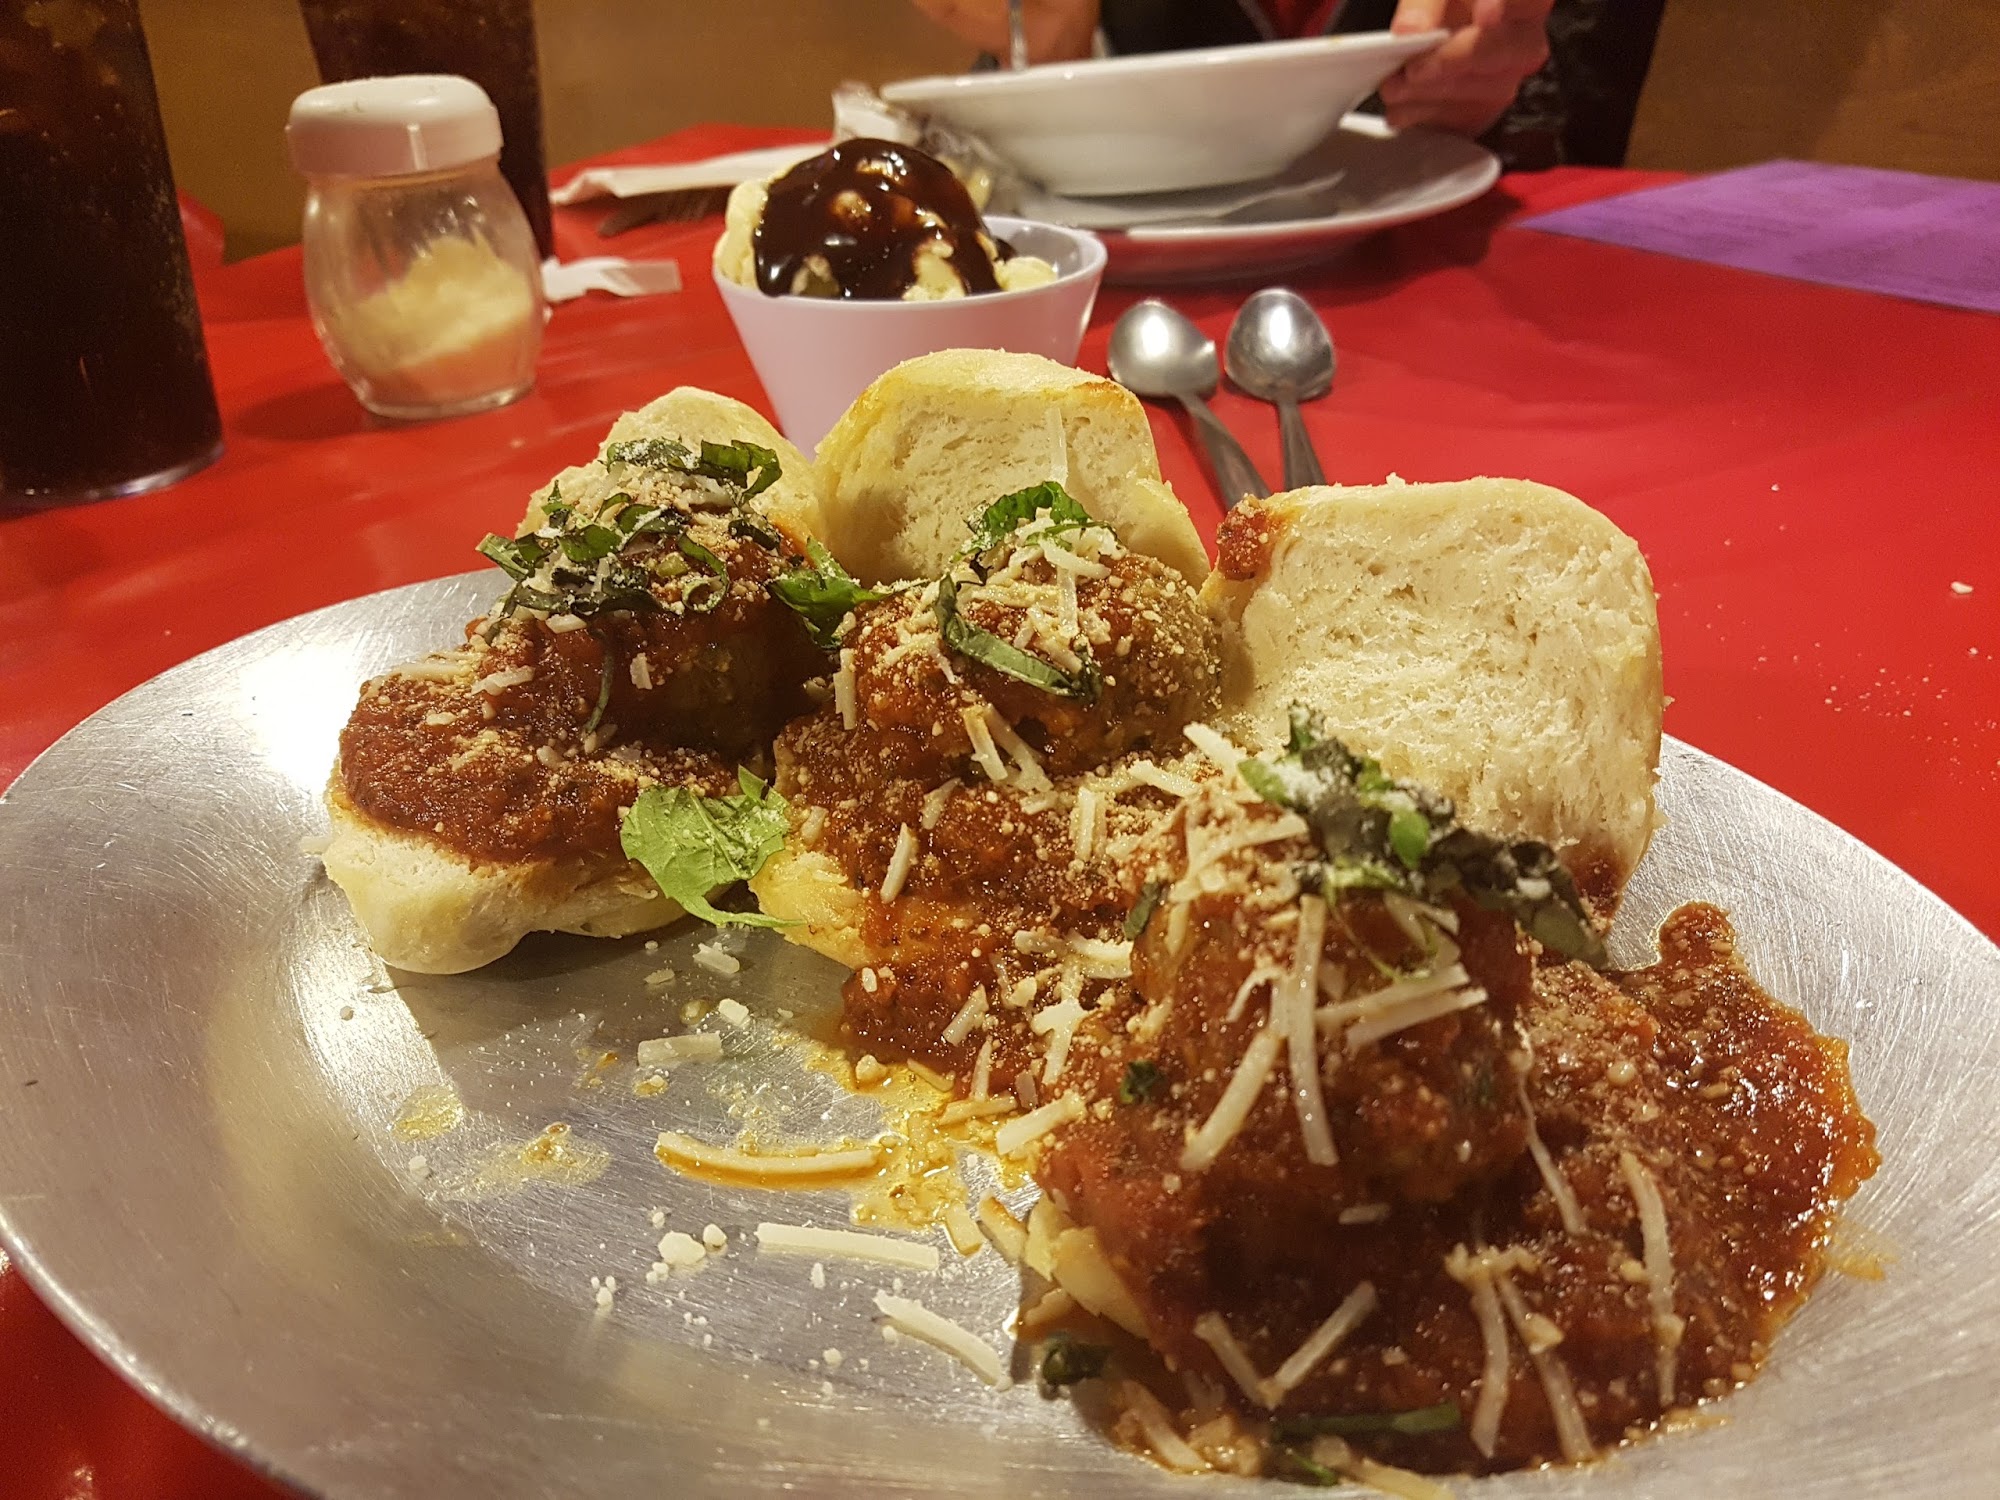 The Capri Italian Restaurant